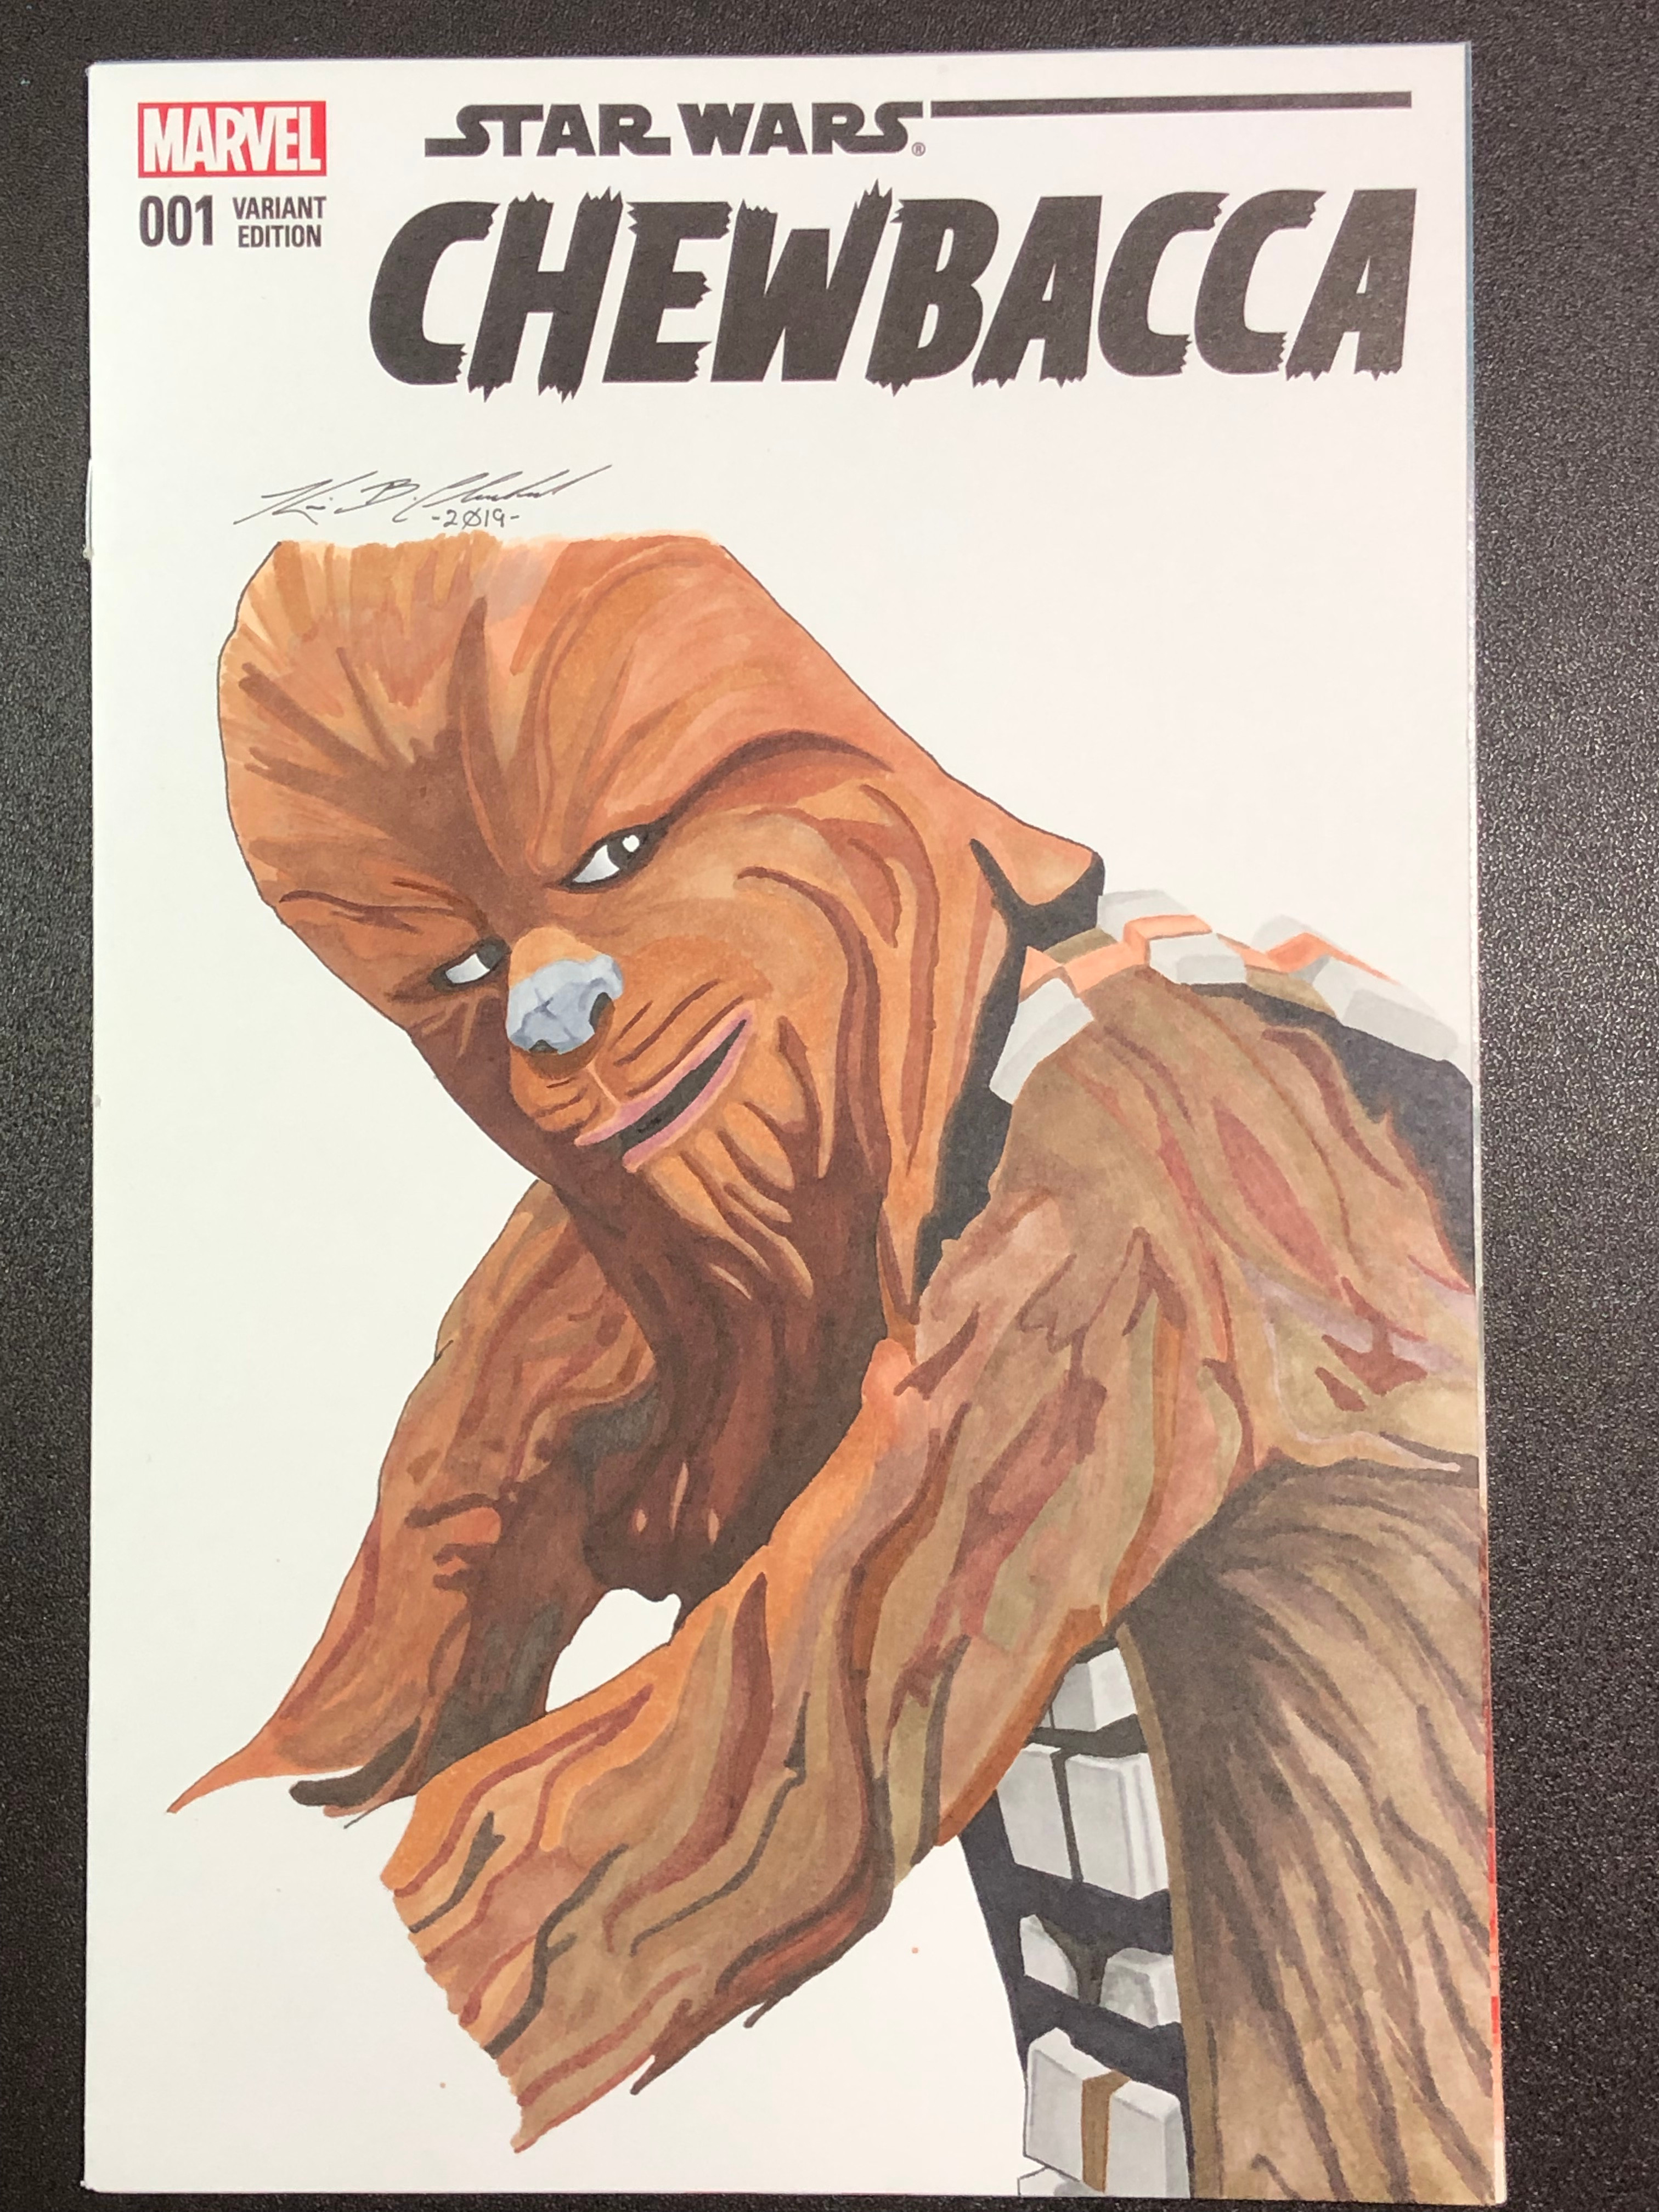 Comic cover art - animated Chewbacca